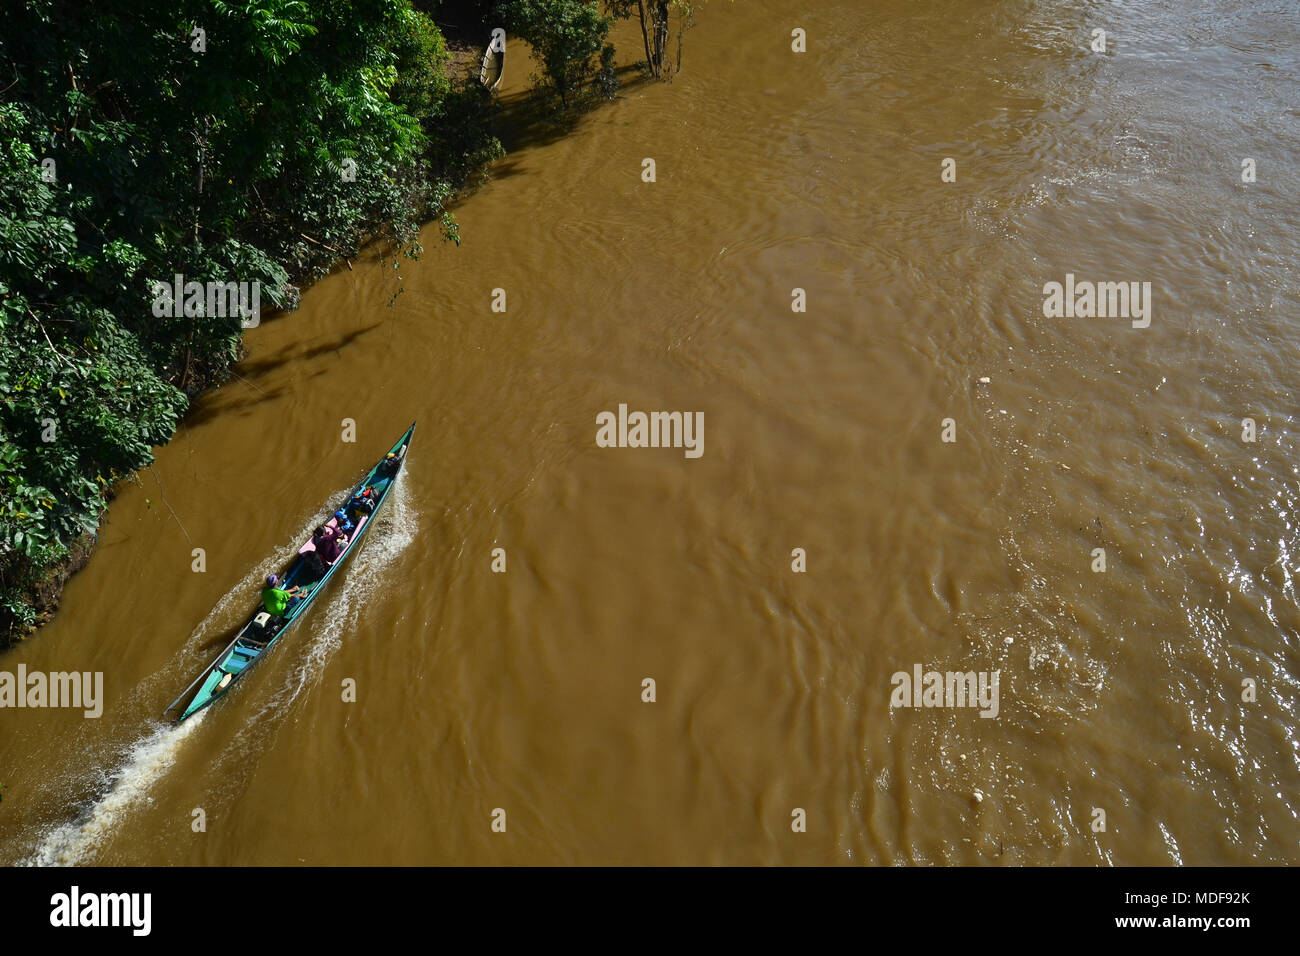 community activities on the Barito river, Borneo, Indonesia. Stock Photo